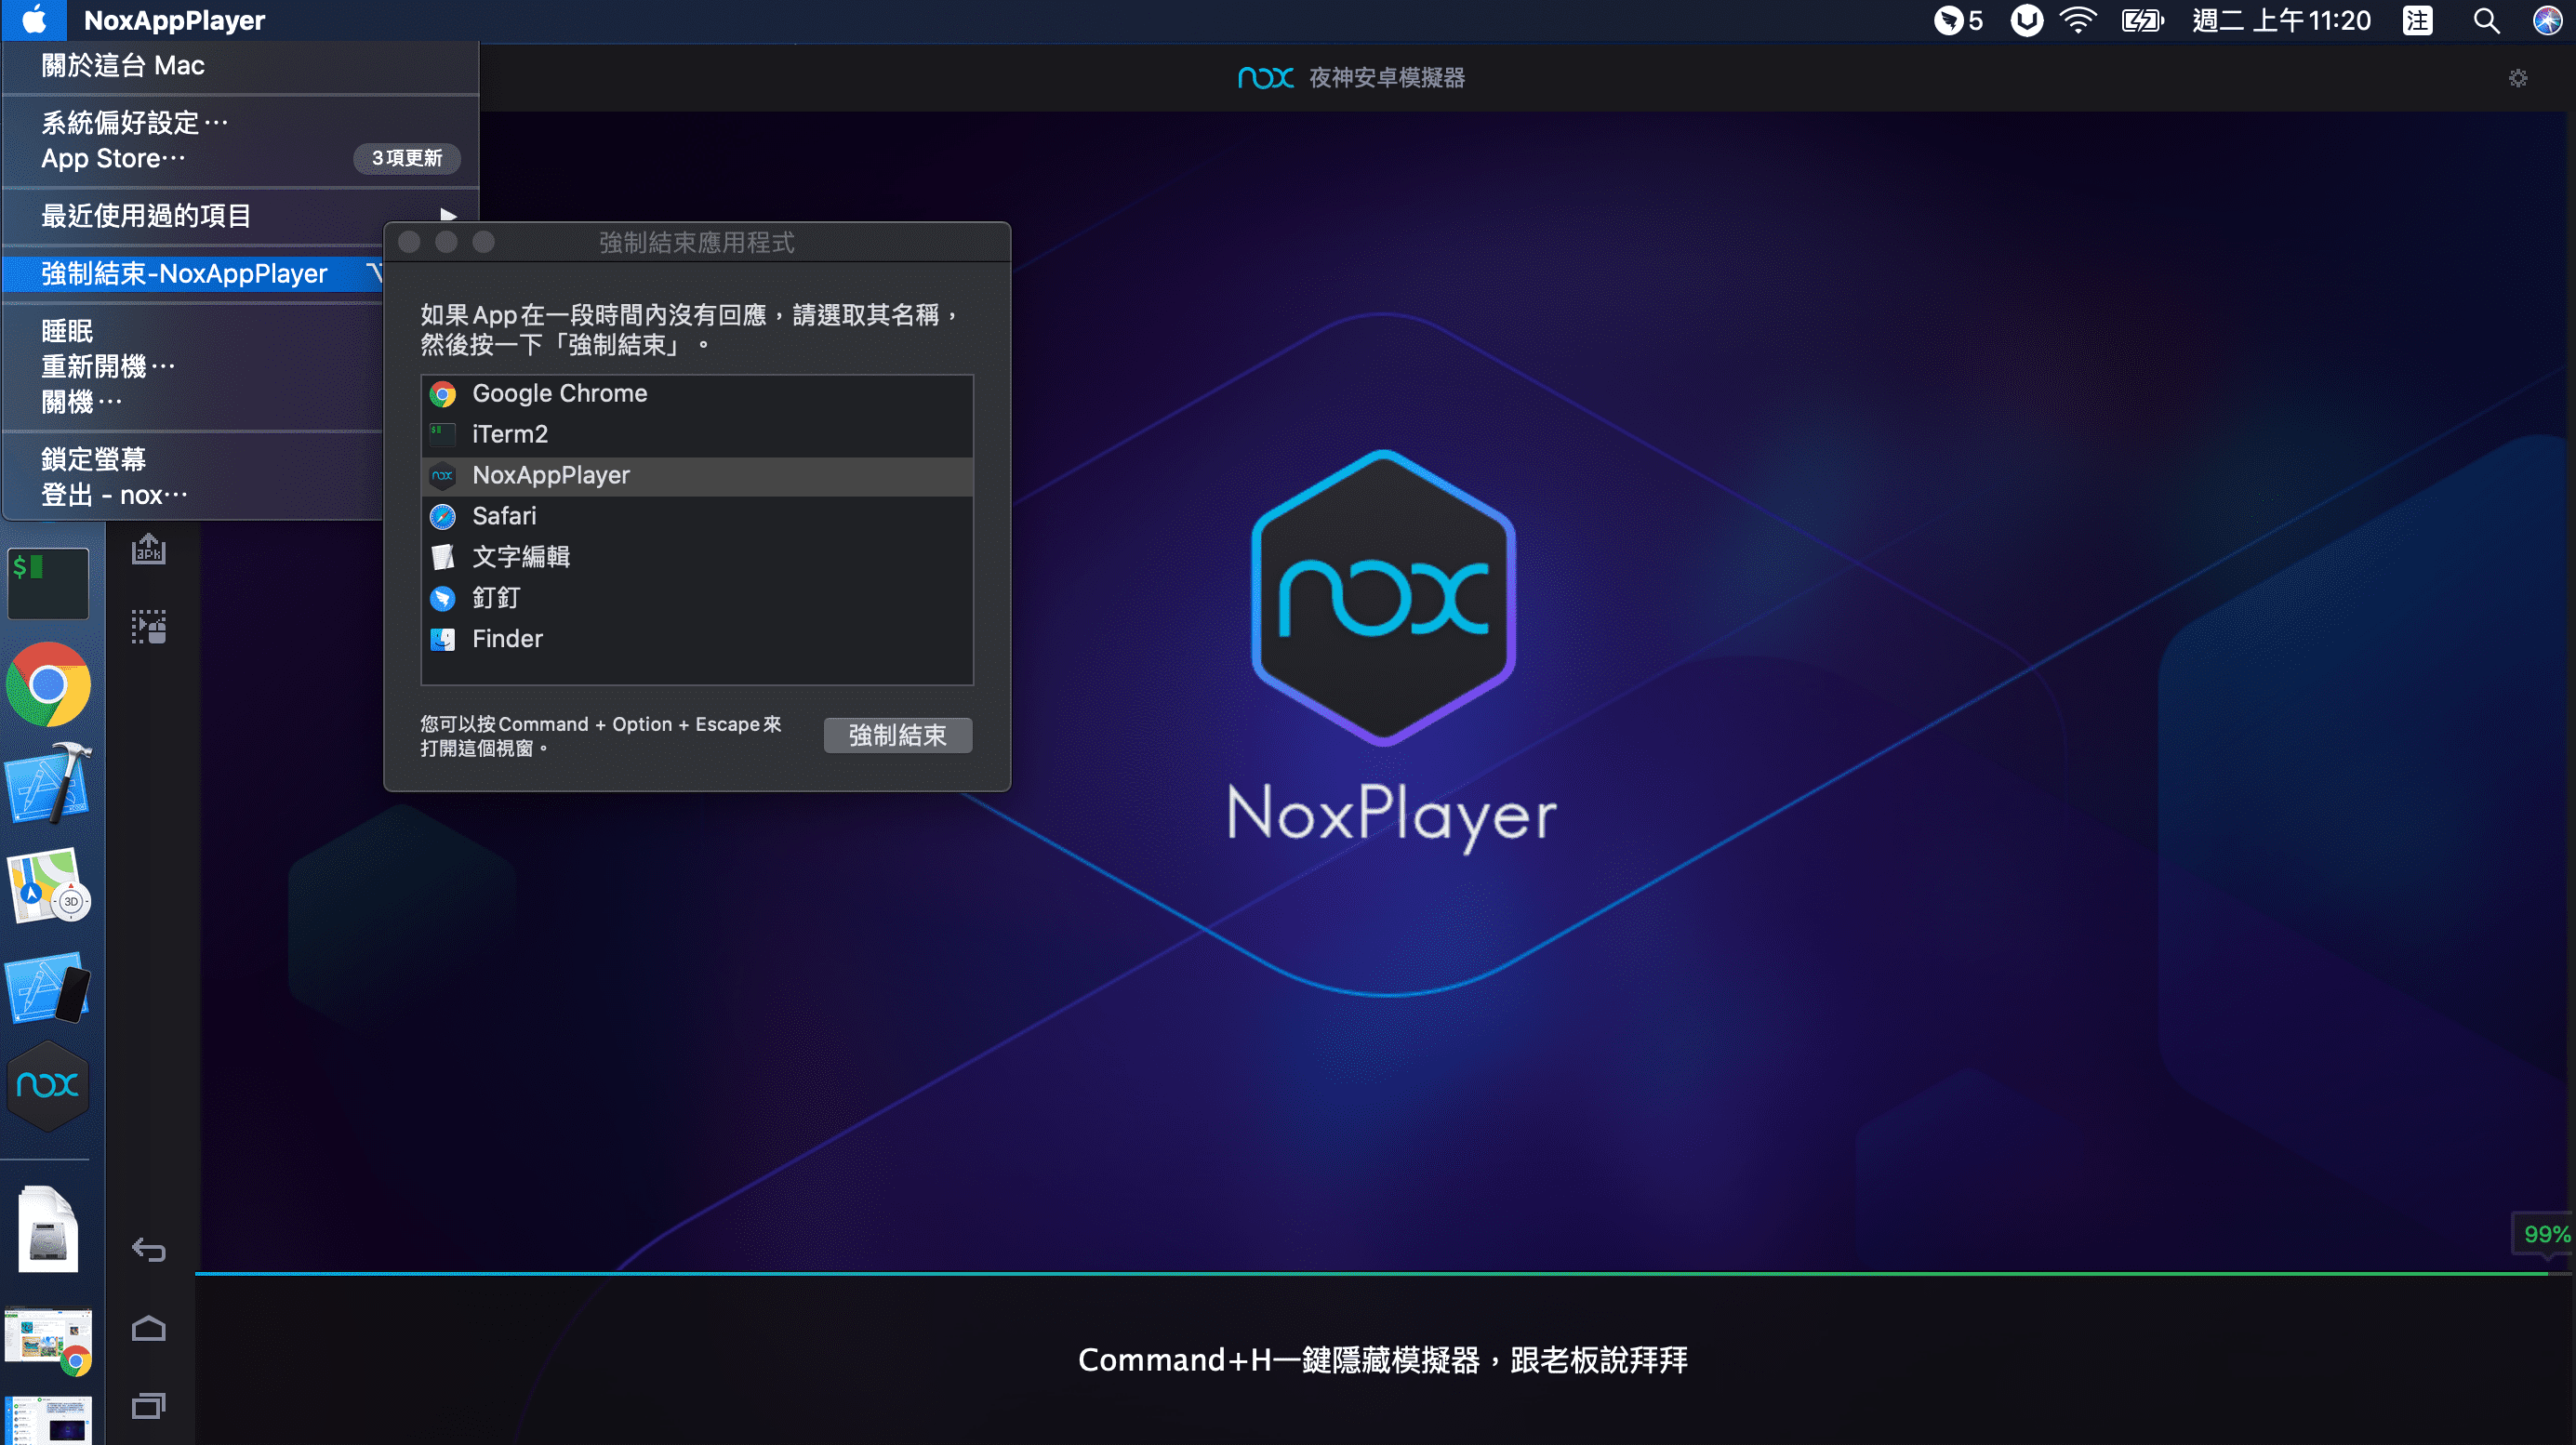 noxplayer done key